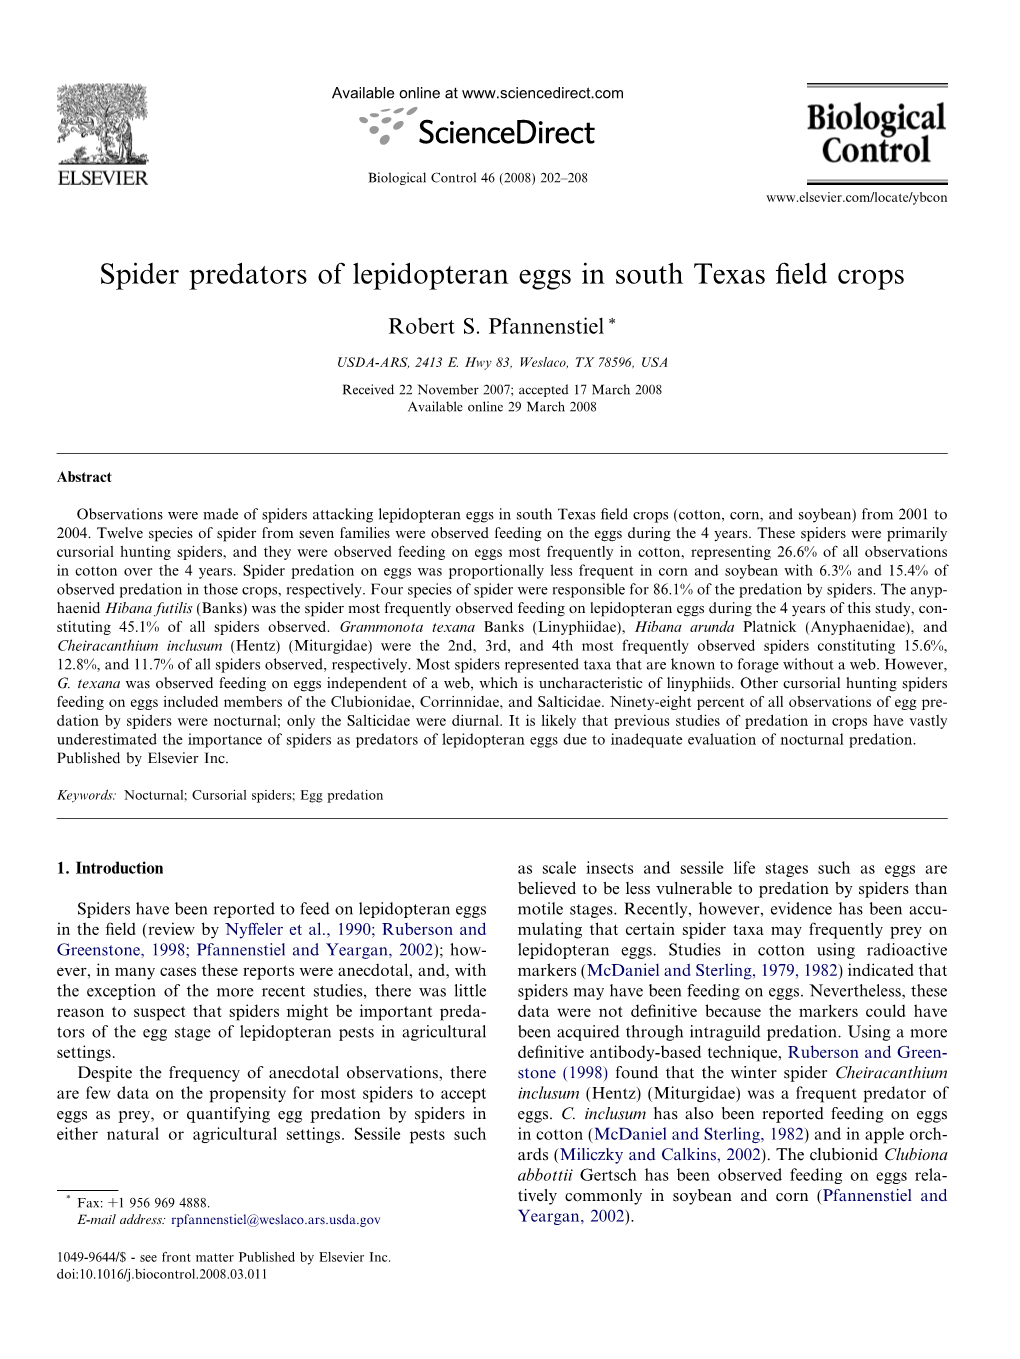 Spider Predators of Lepidopteran Eggs in South Texas Field Crops